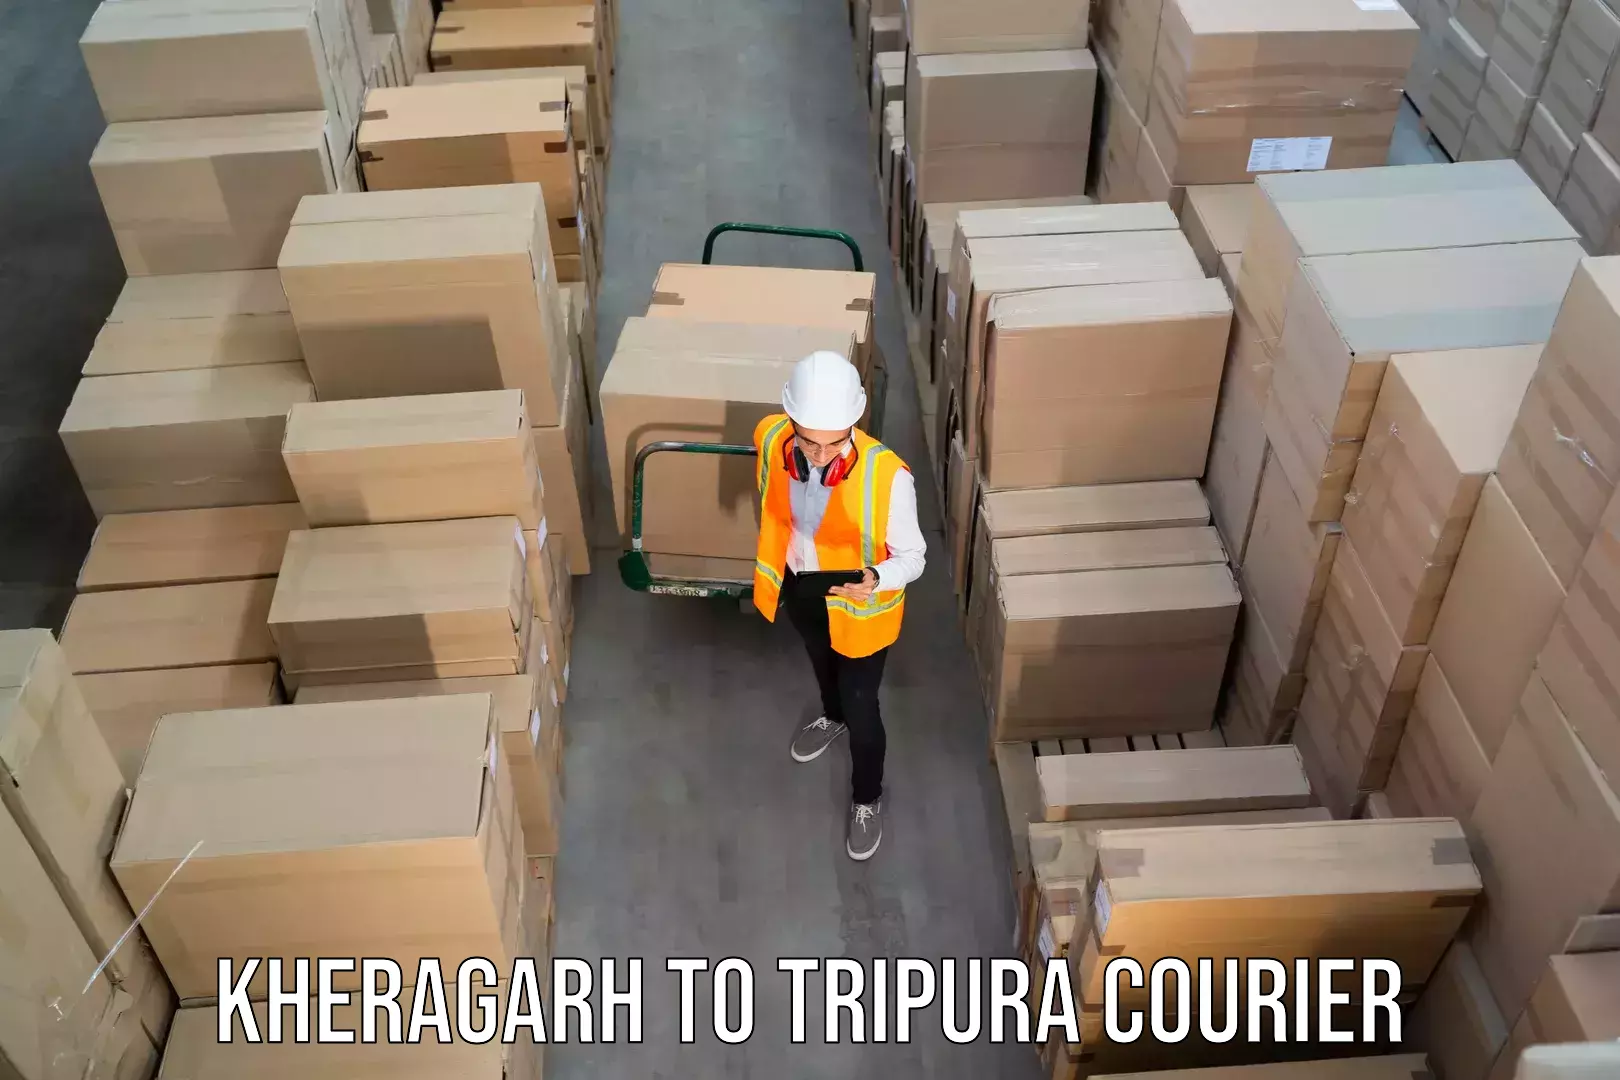 Digital courier platforms Kheragarh to Dharmanagar